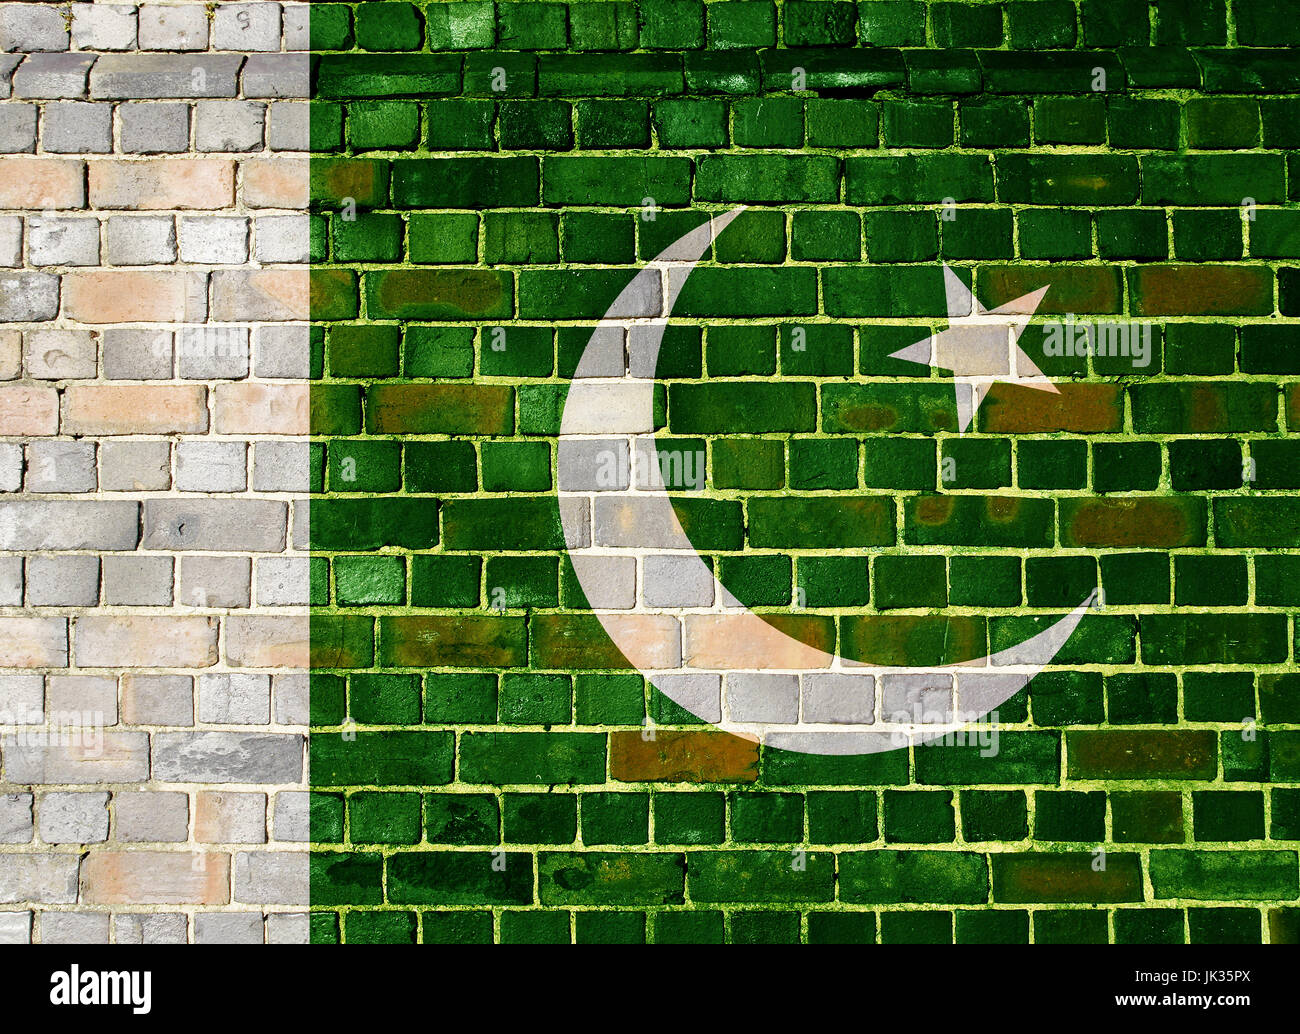 Pakistani flag on an old brick wall background Stock Photo